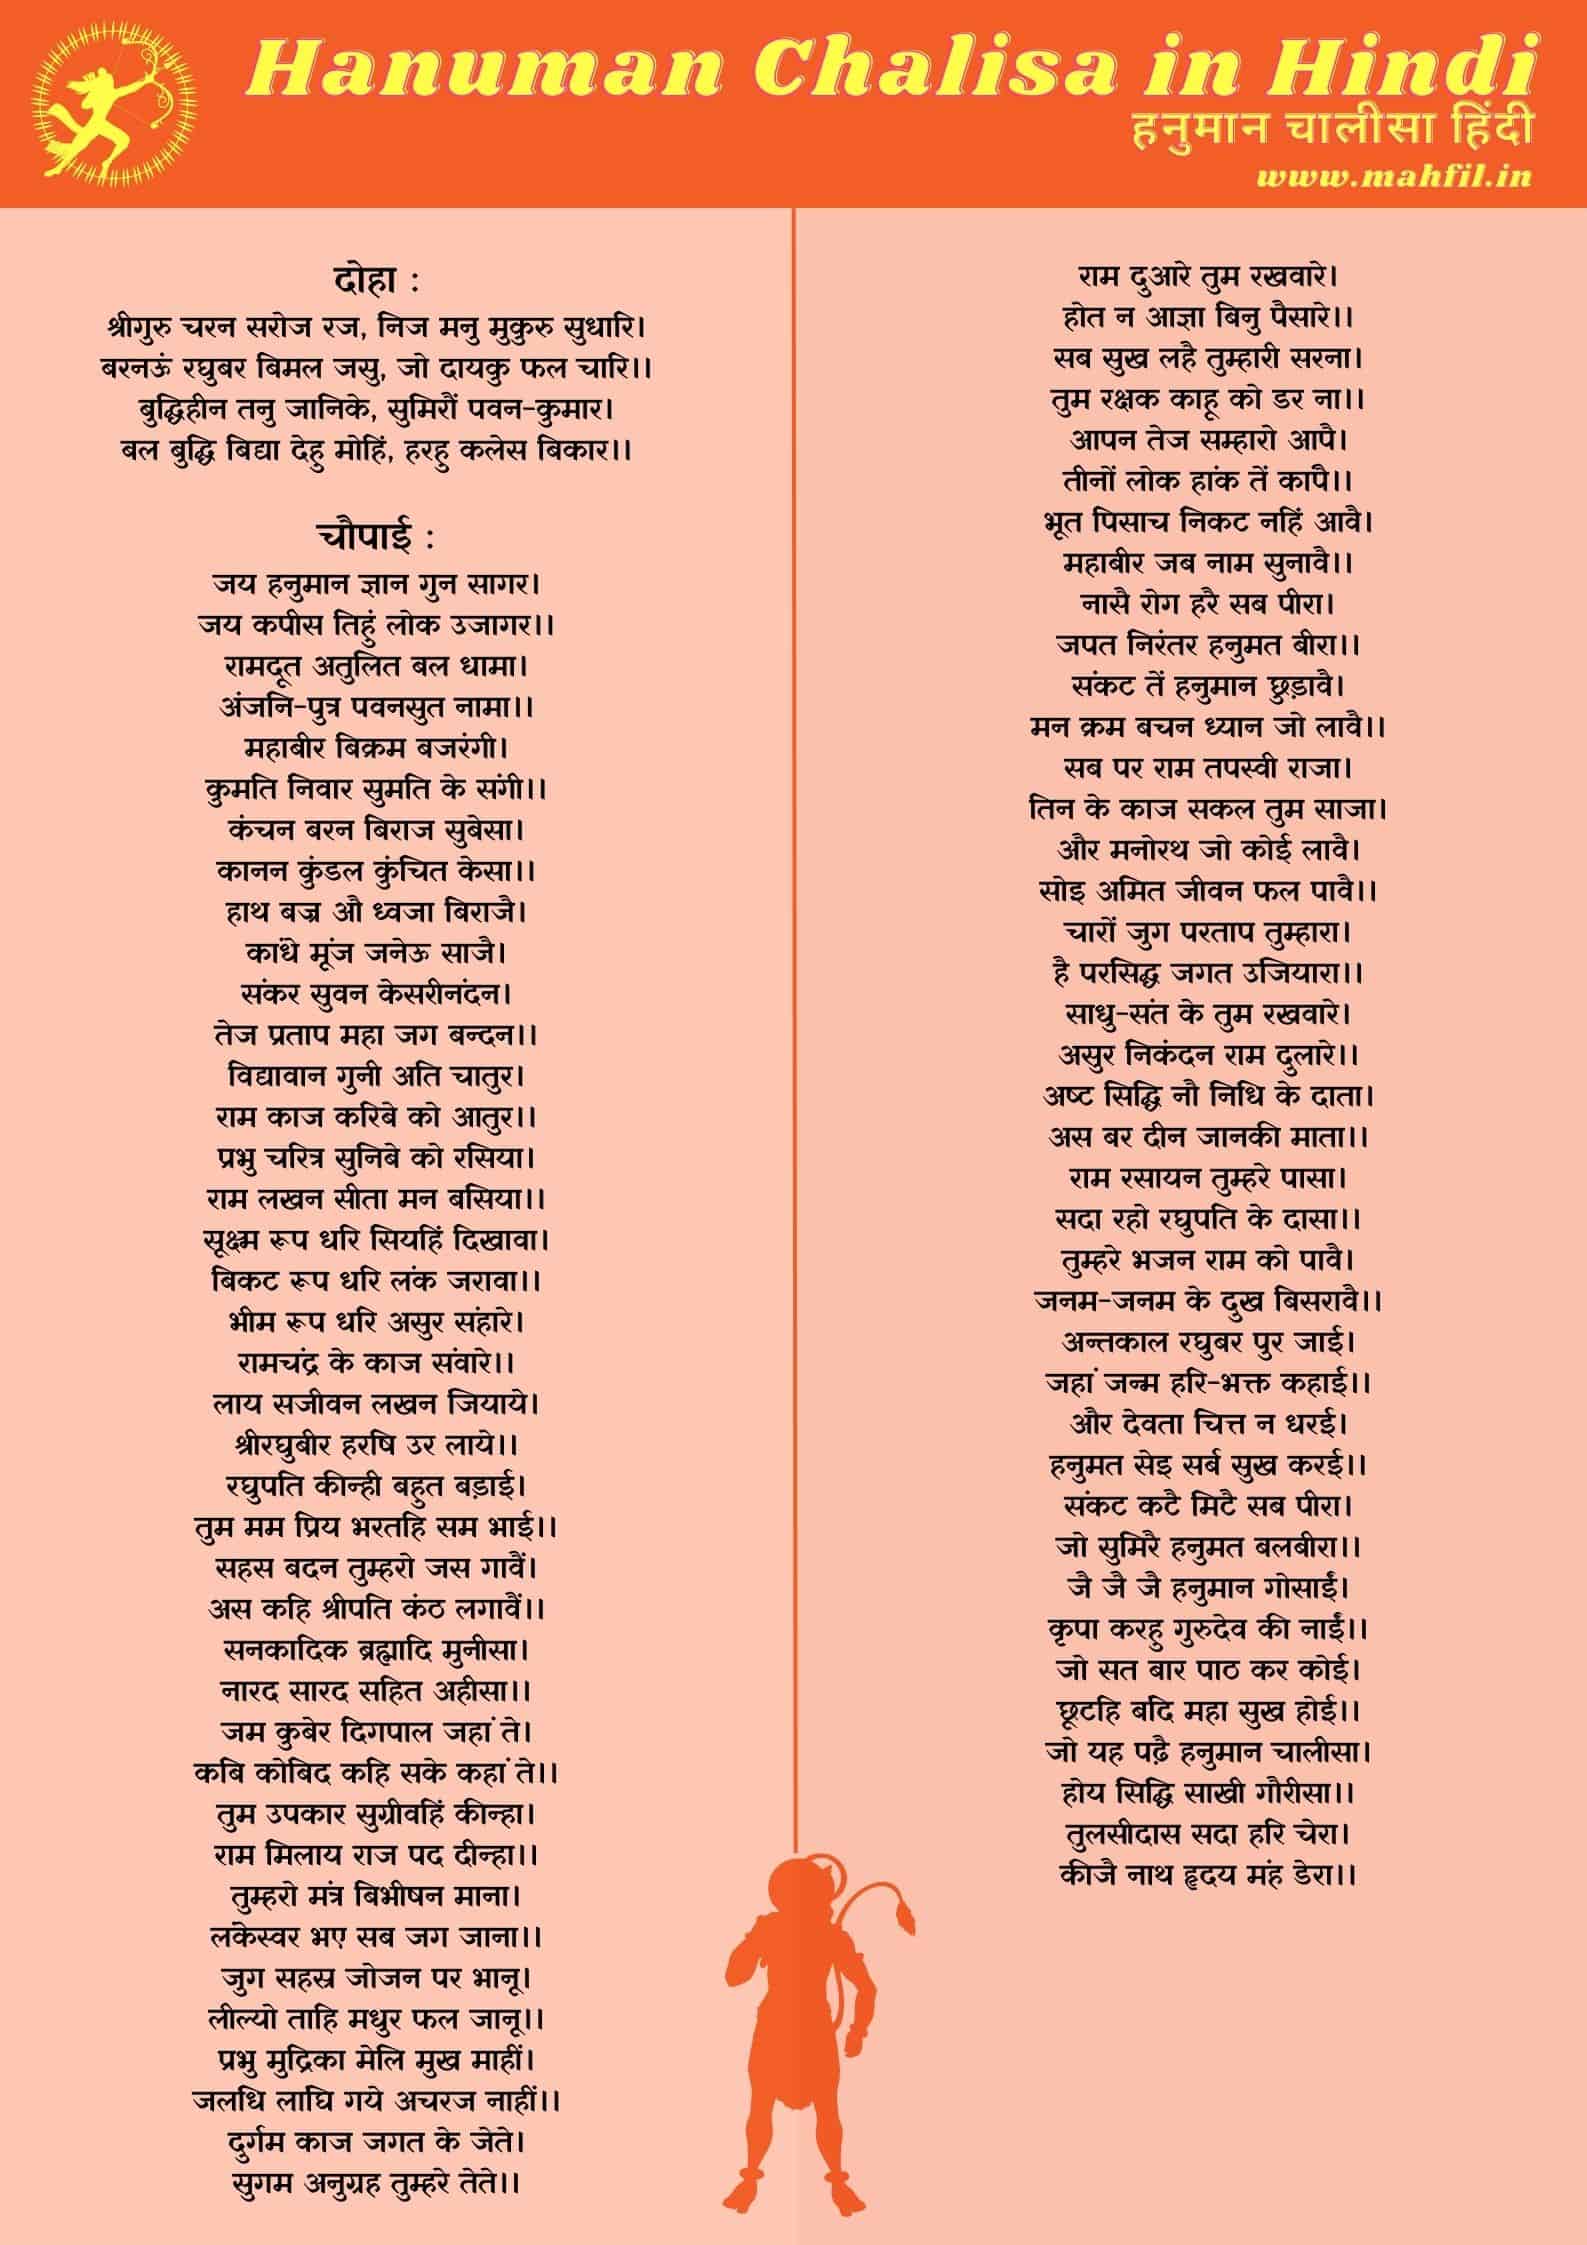 Hanuman Chalisa Lyrics in Hindi 